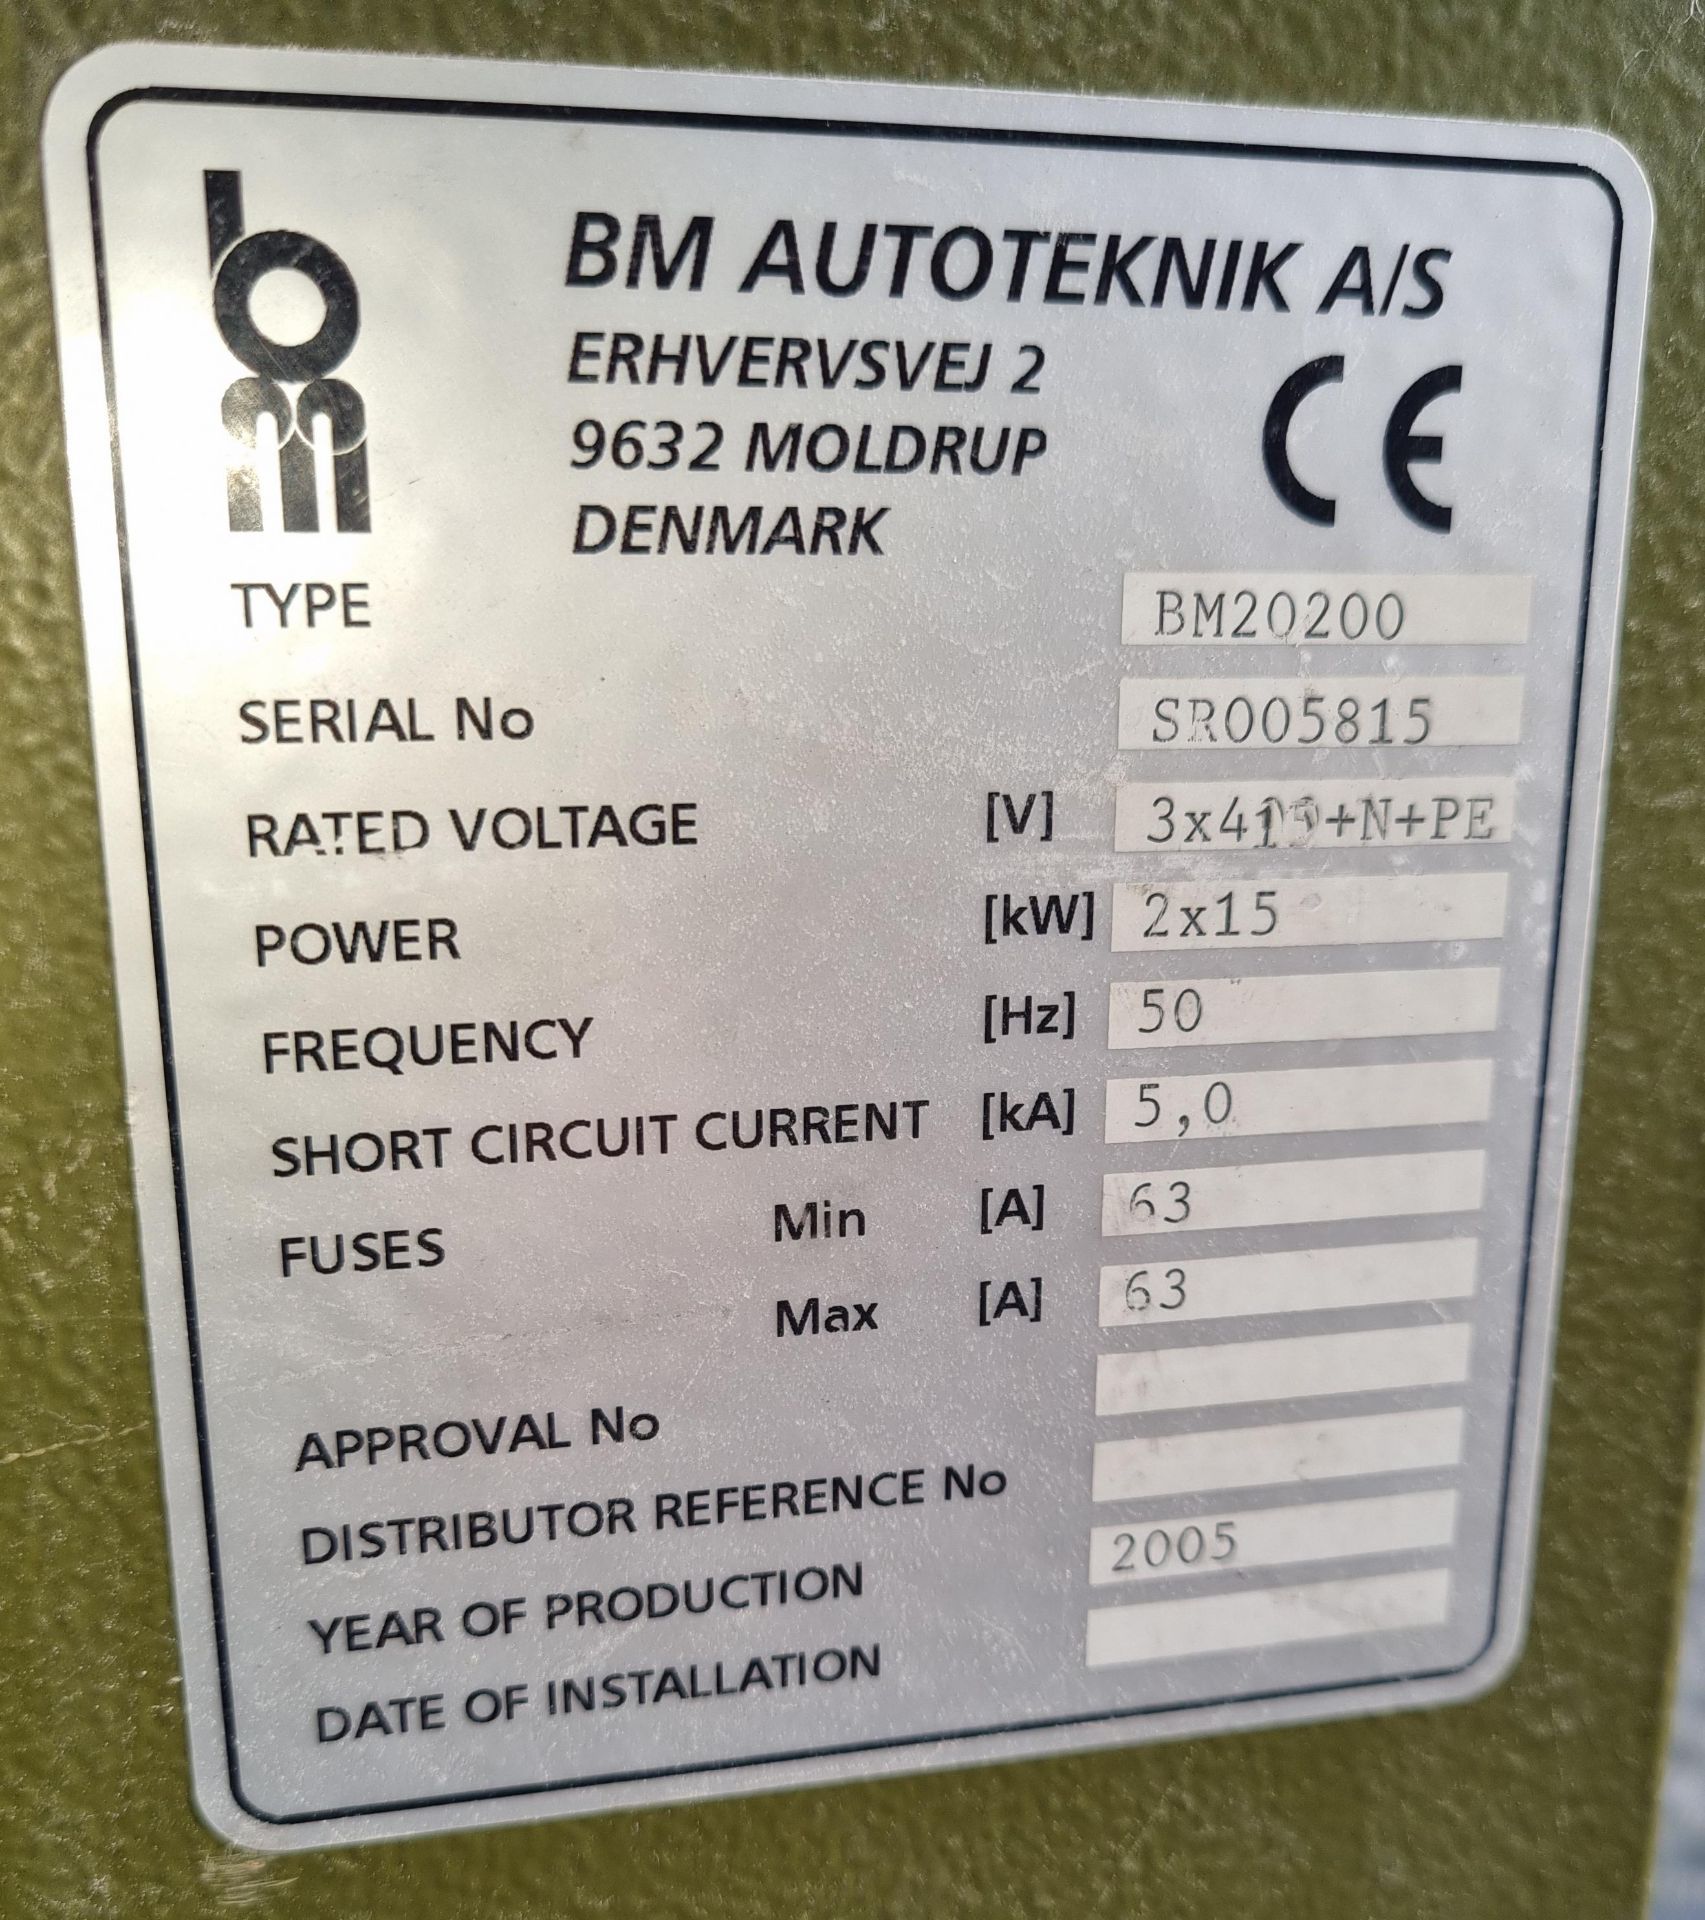 BM Autoteknik A/S BM20200 Brake tester with Genset A Thermodyne Company - MG 75 53P Diesel generator - Image 4 of 28